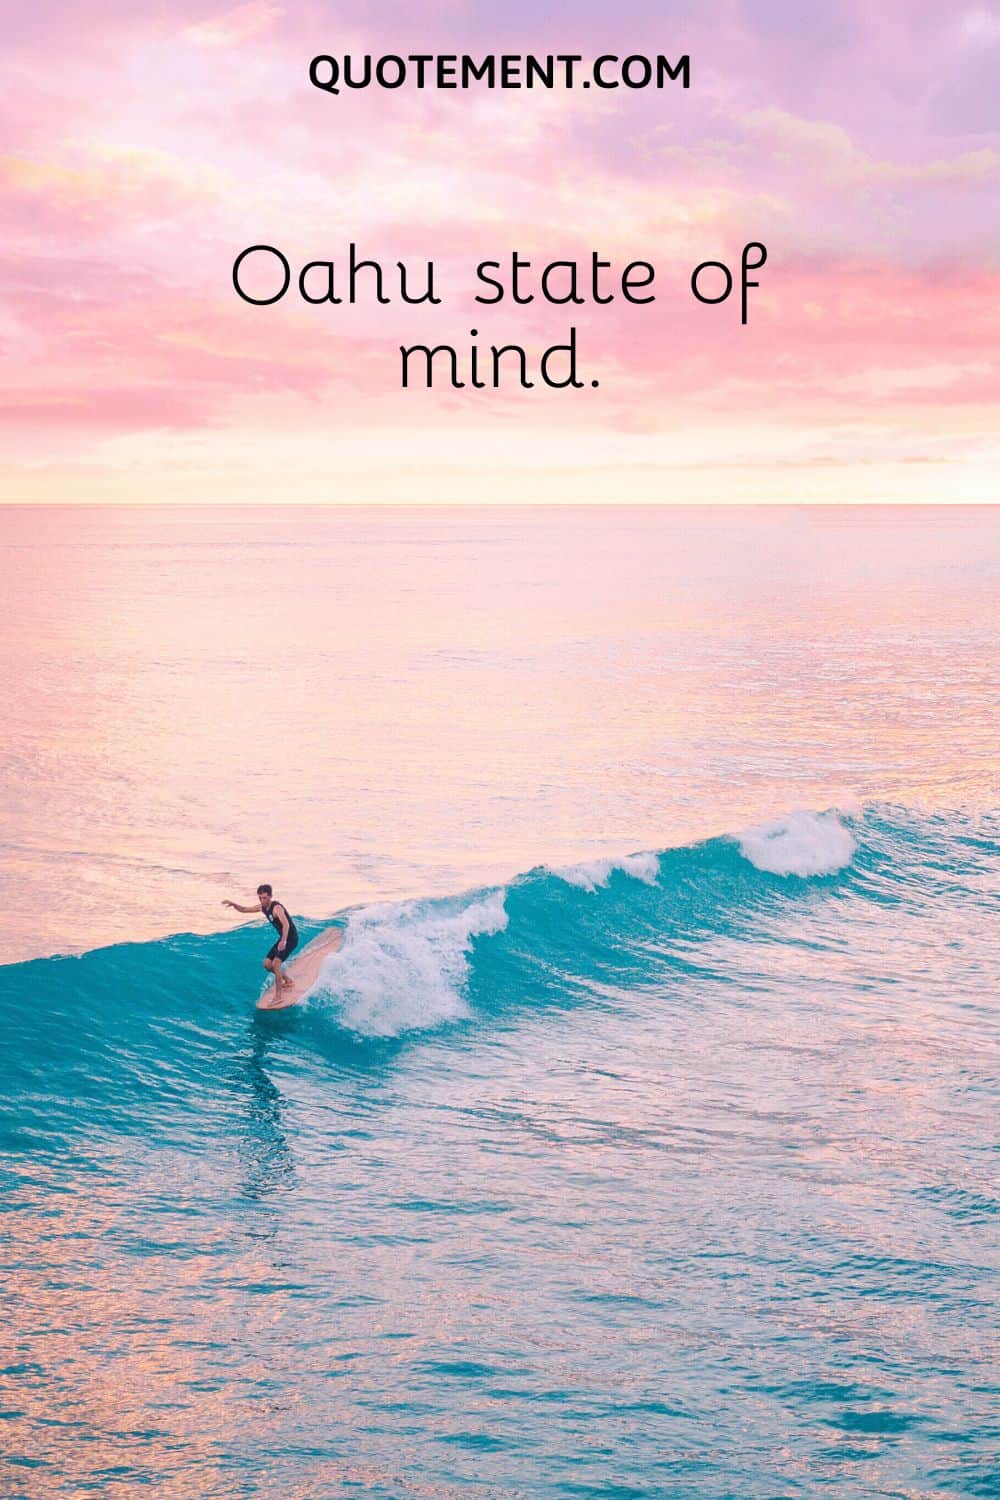 Oahu state of mind.